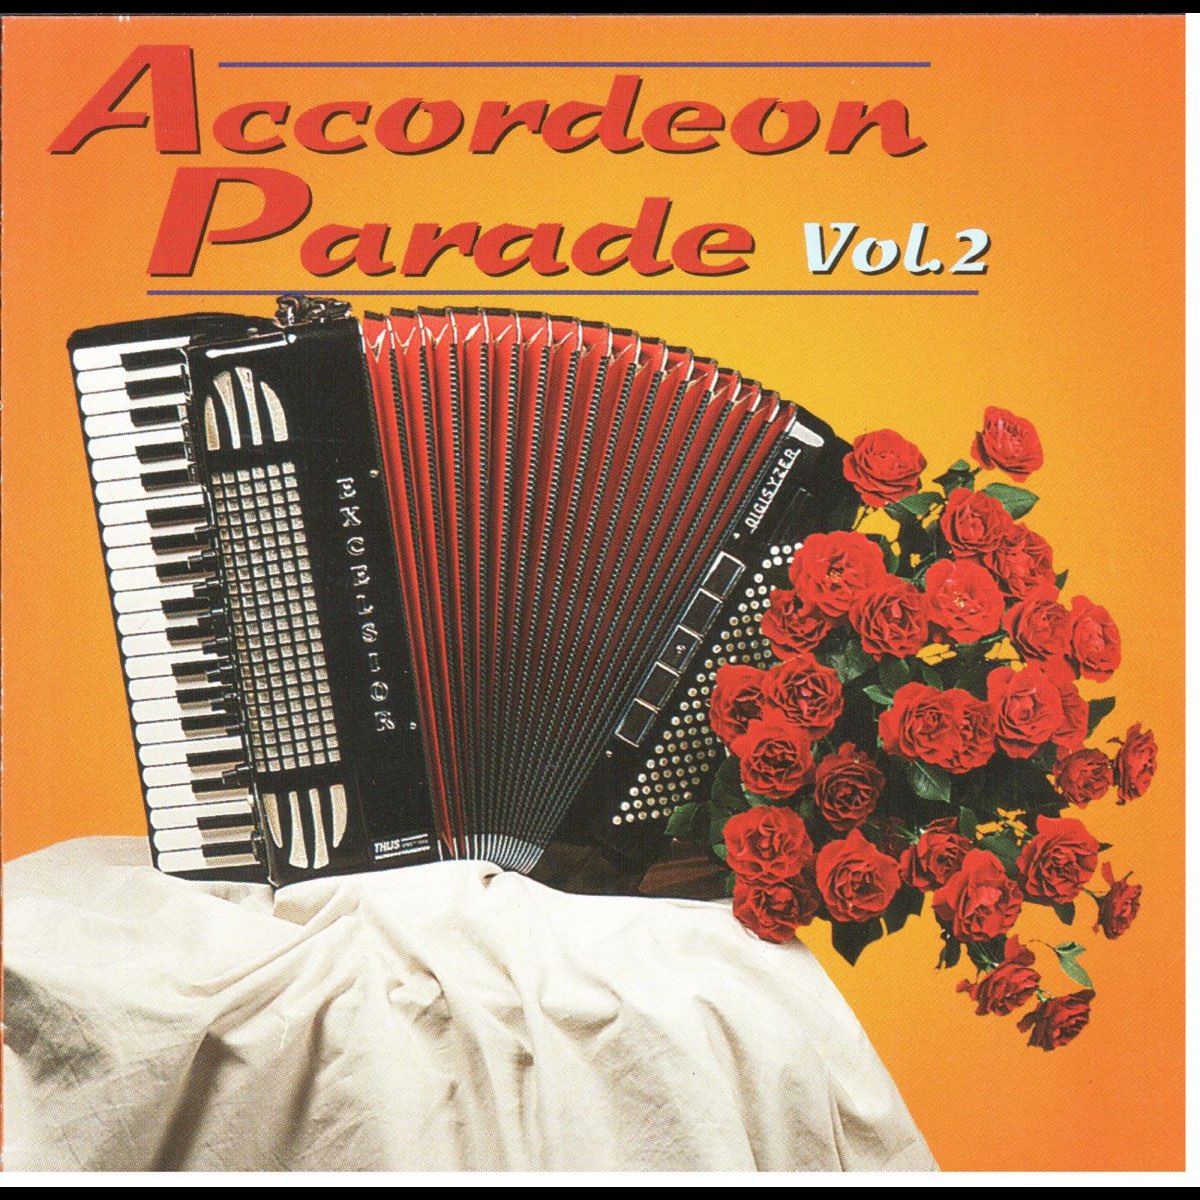 Accordeon Parade Vol.2 by Various Artiest on Apple Music